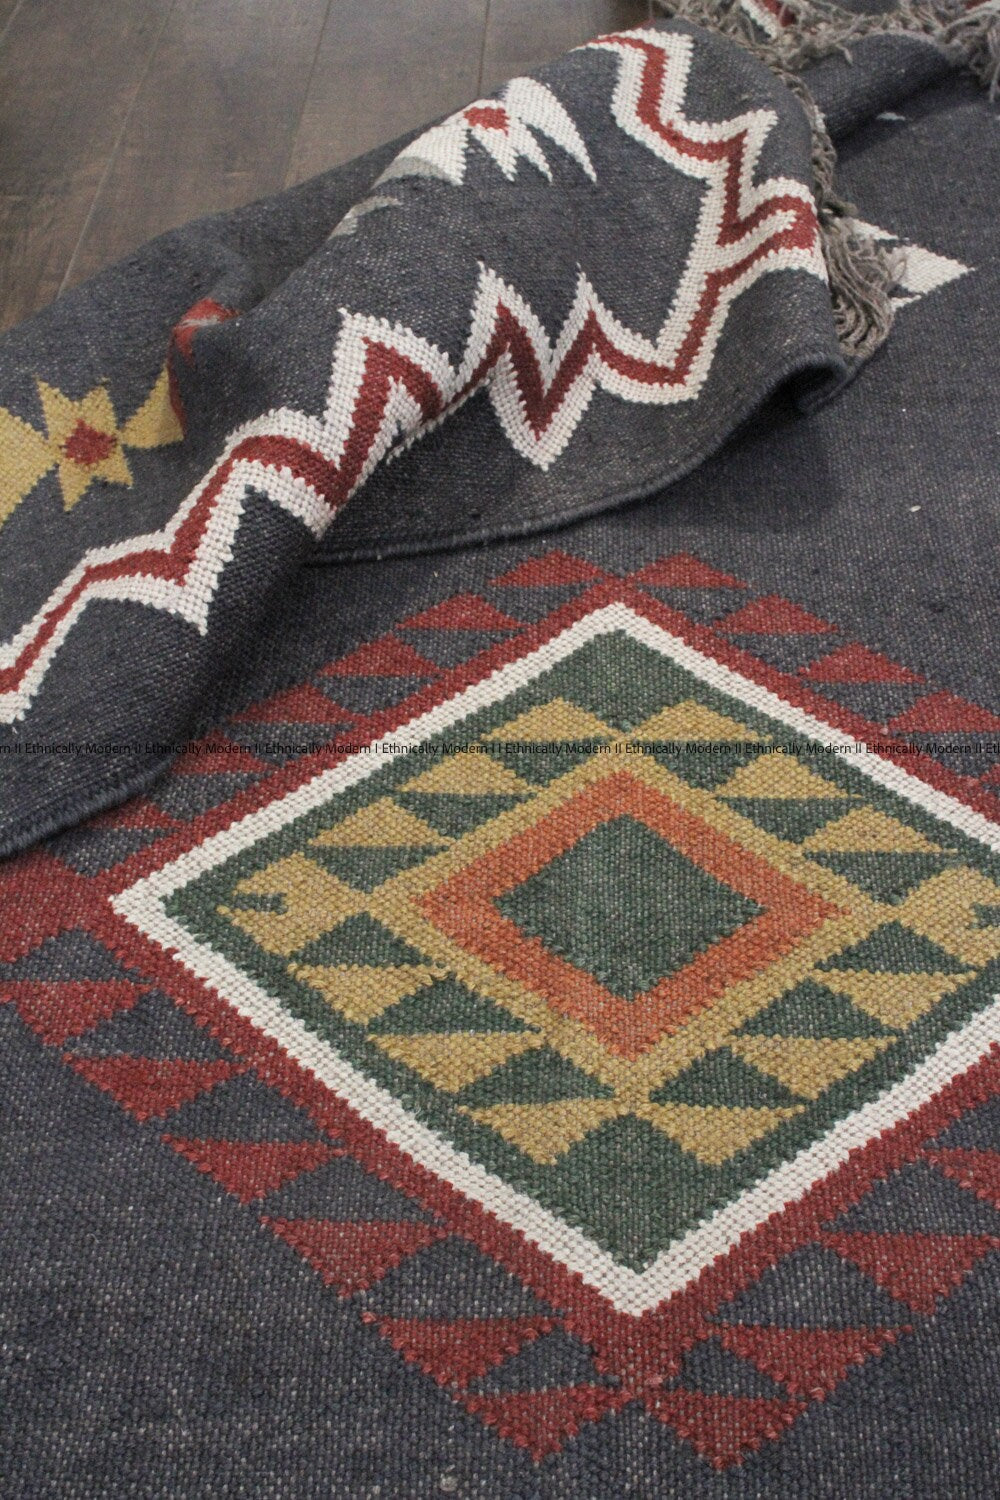 Wool and Jute, Handwoven Traditional Indian Rug, Kilim Rug, Punja Rug, Natural Fibre Rug